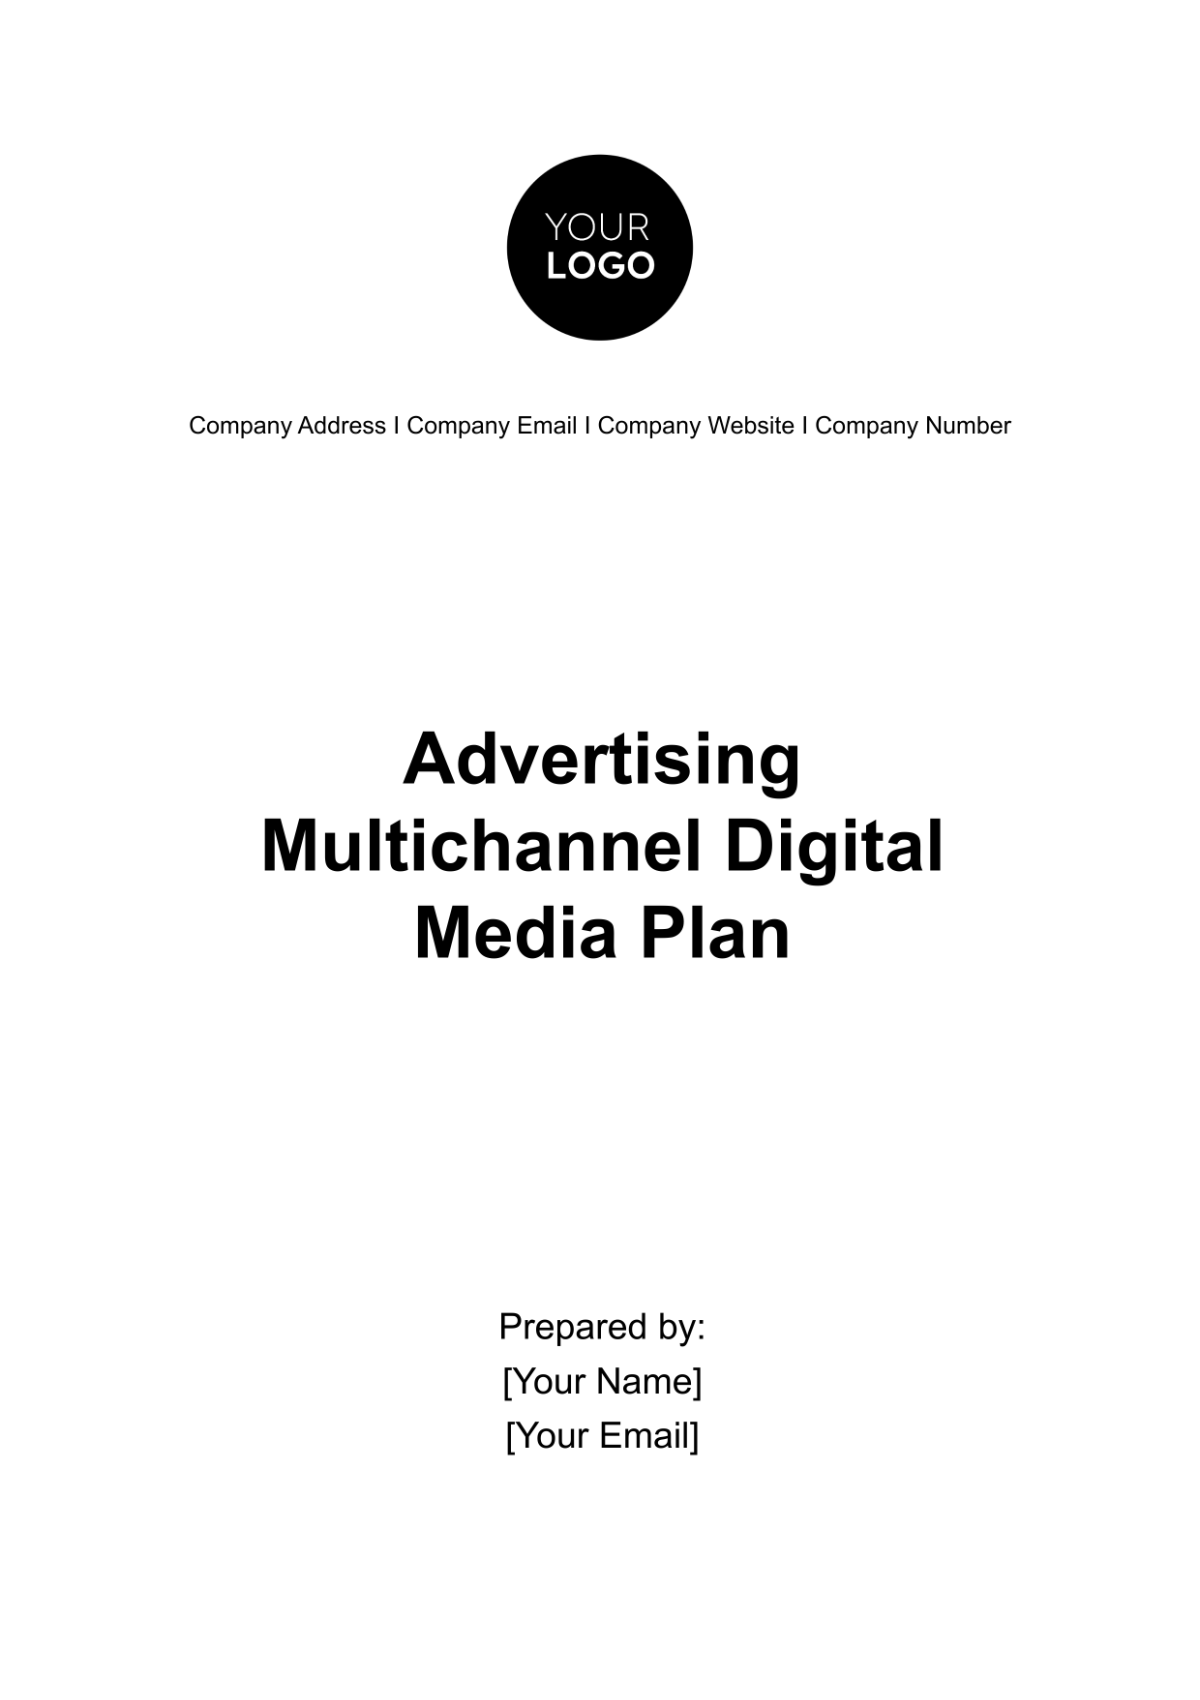 Advertising Multichannel Digital Media Plan Template